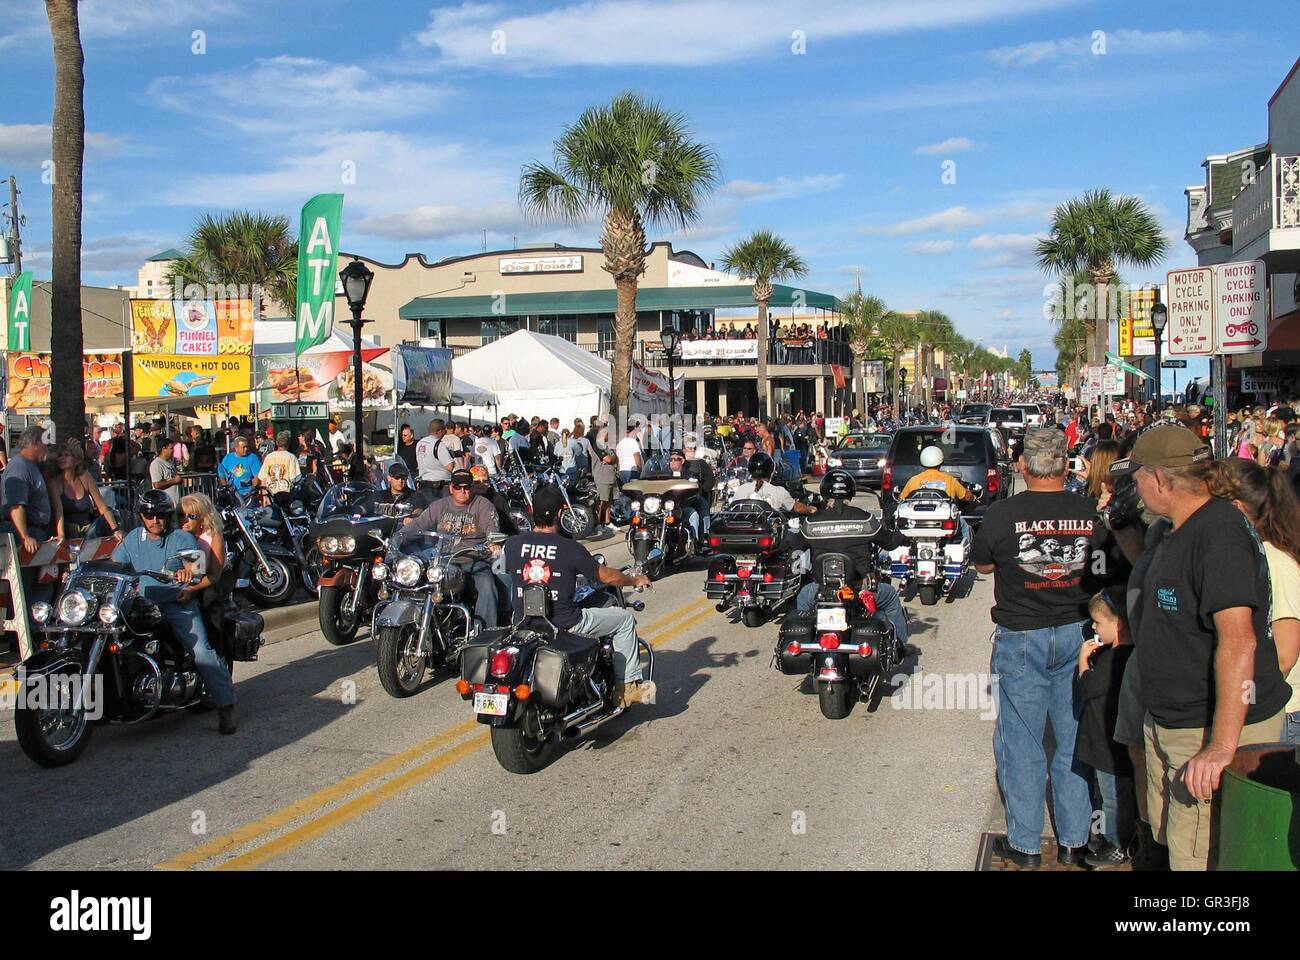 Daytona Beach Florida's Main Street during Biketoberfest, a motorcycle gathering that takes place every October. Stock Photo